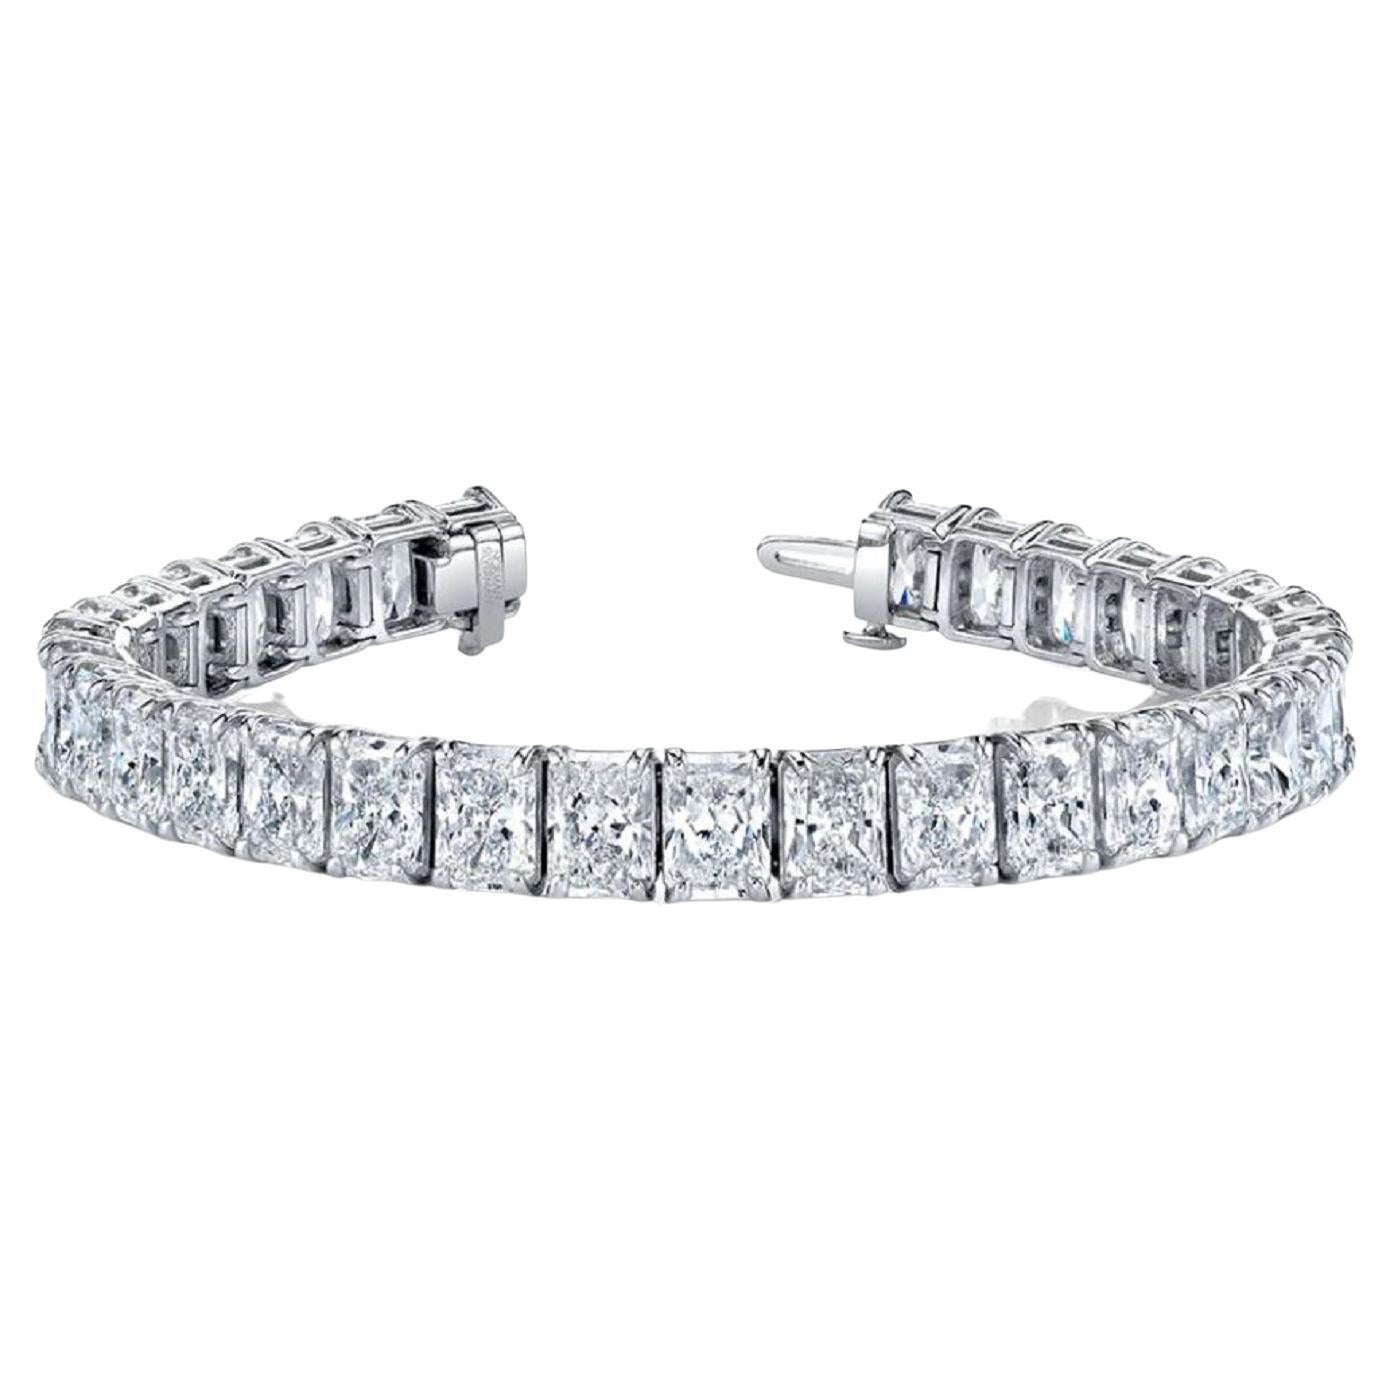 Diana M. Platinum Diamond Bracelet with 32.59cts Radiant Cut Gia Diamonds For Sale